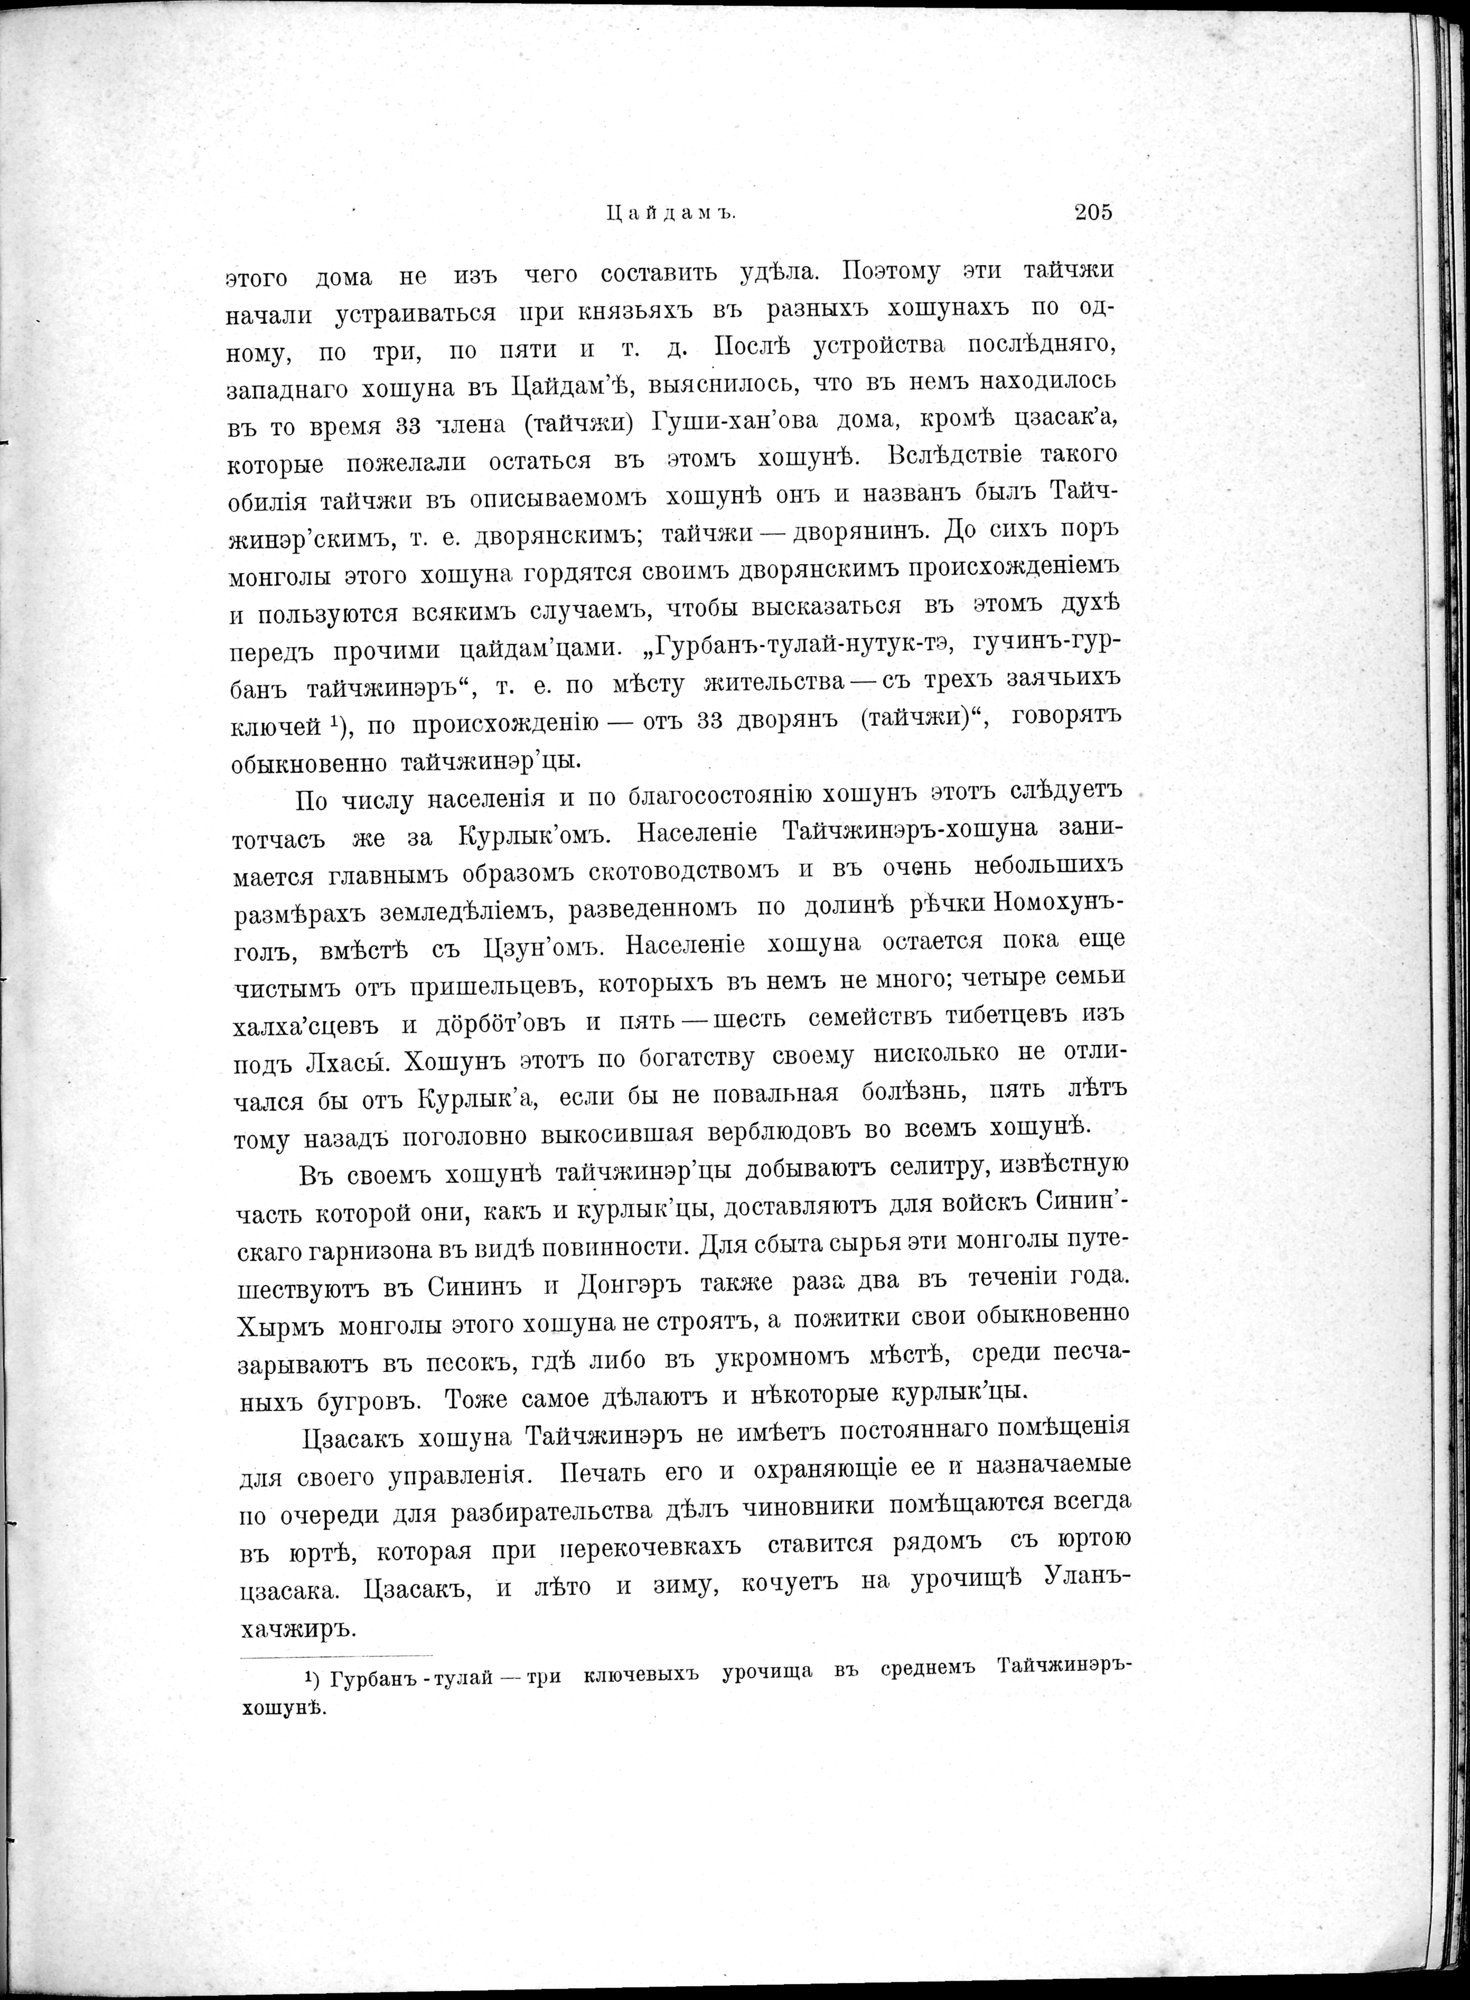 Mongoliia i Kam : vol.1 / Page 253 (Grayscale High Resolution Image)